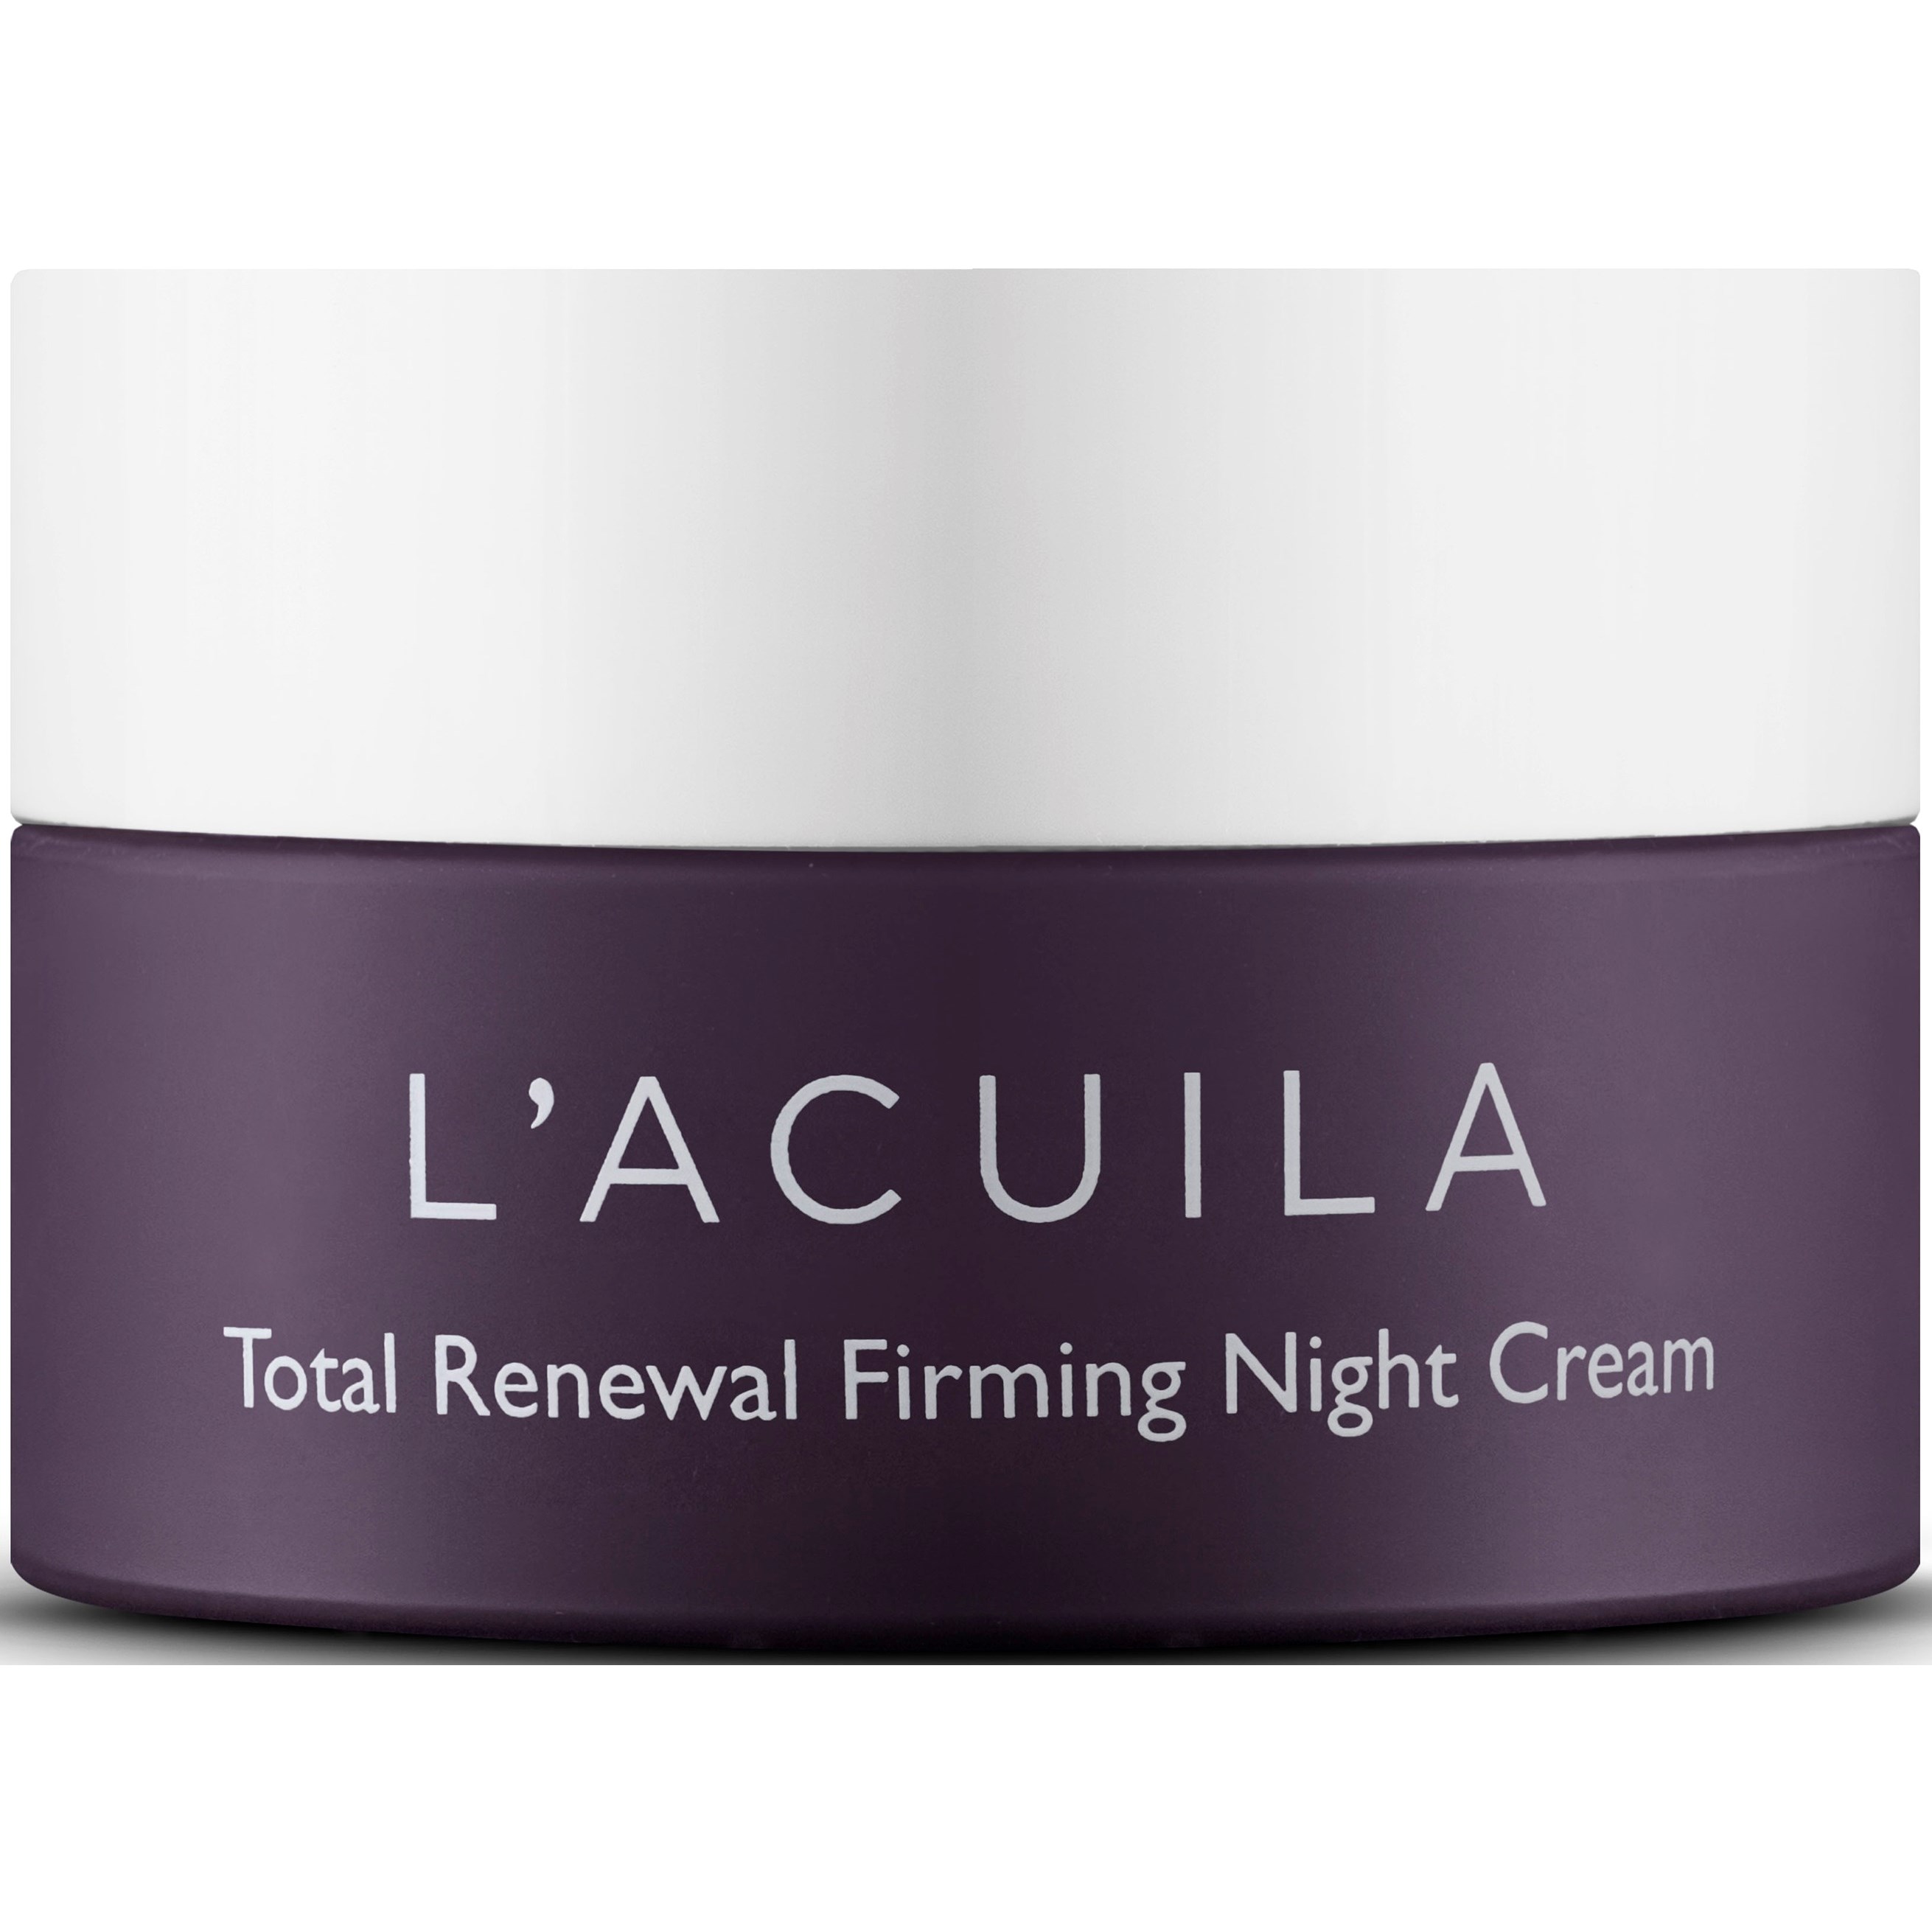 LAcuila Total Renewal Firming Night Cream 50 ml